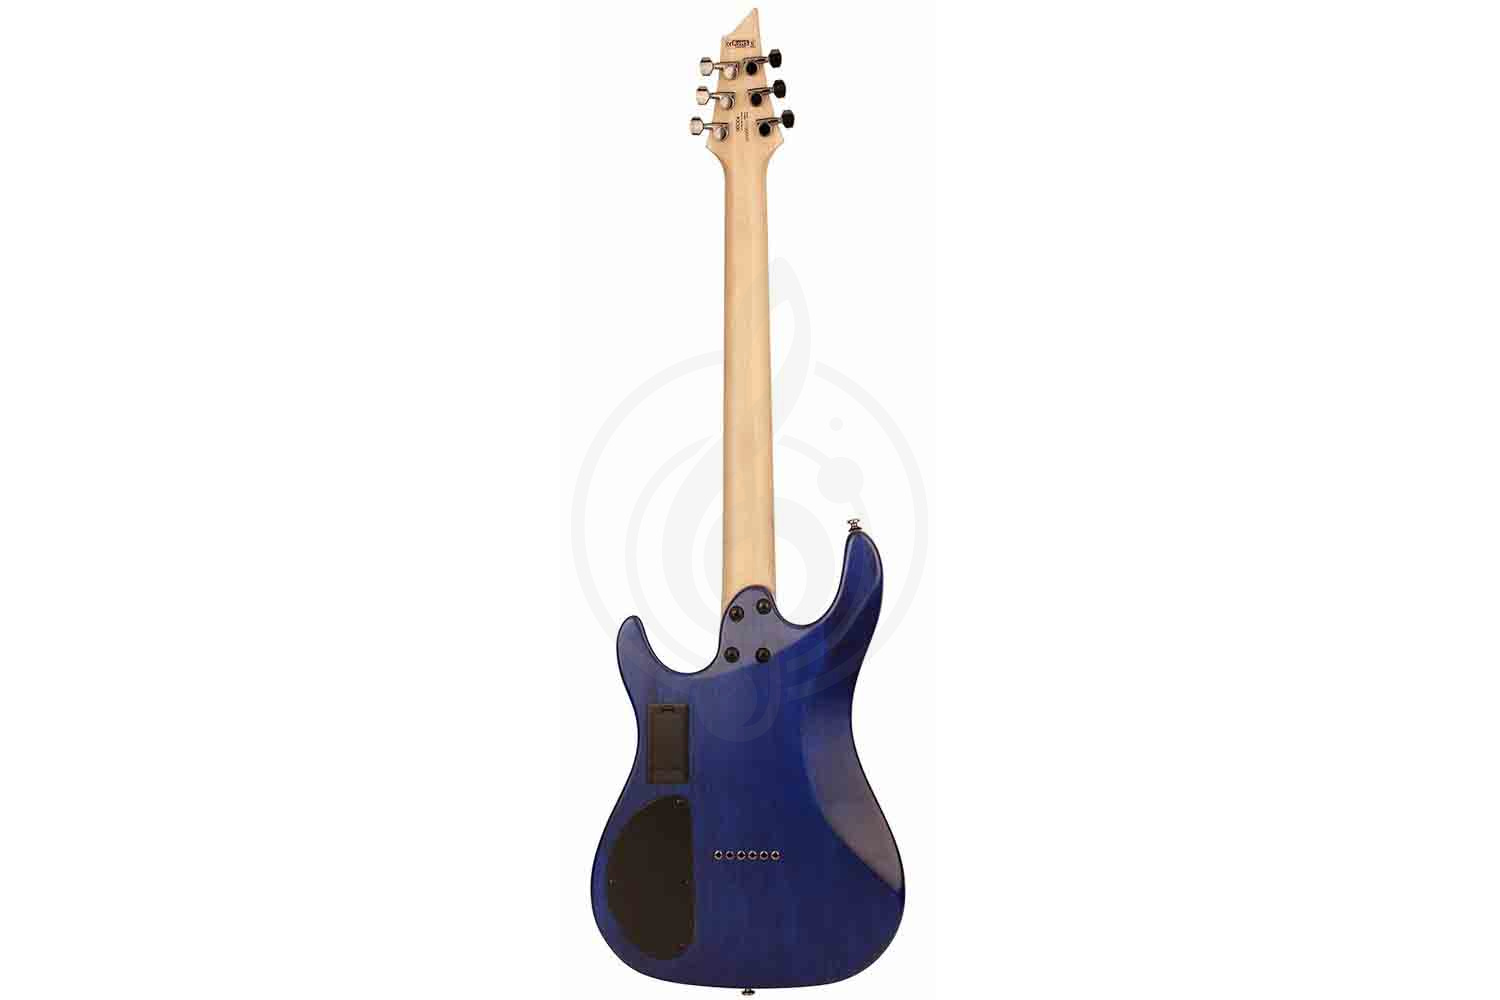 Электрогитара Stratocaster Cort KX300-WBAG-OPCB KX Series - Электрогитара, синий санберст, с чехлом, Cort KX300-WBAG-OPCB в магазине DominantaMusic - фото 2